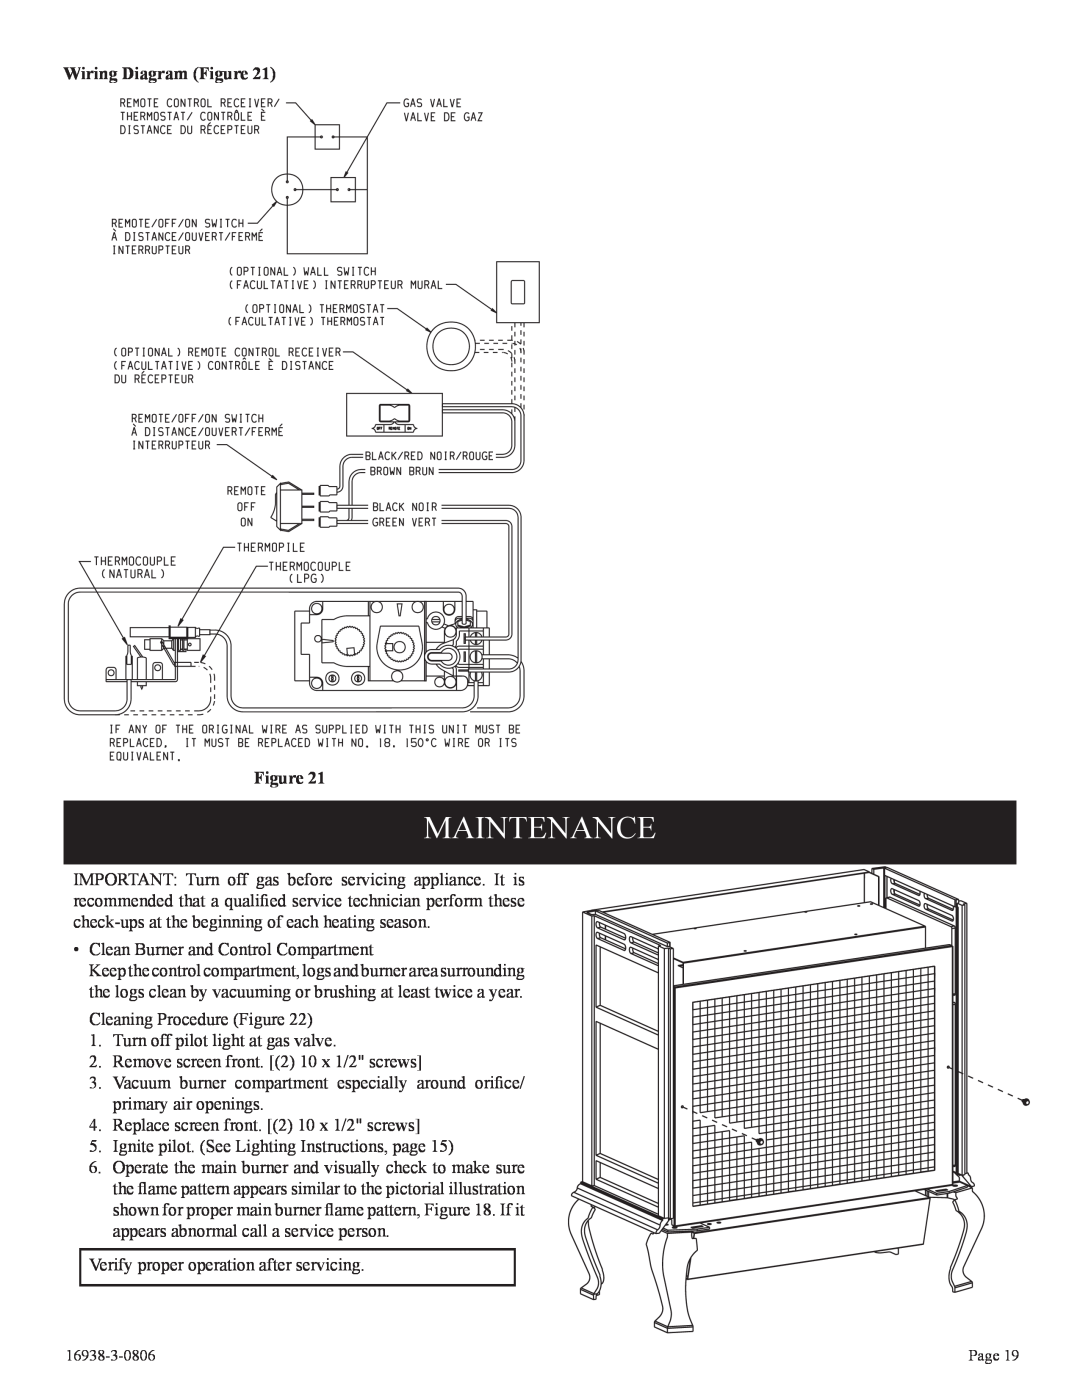 Empire Comfort Systems CIVF-25-21 installation instructions Maintenance, Wiring Diagram Figure Figure 